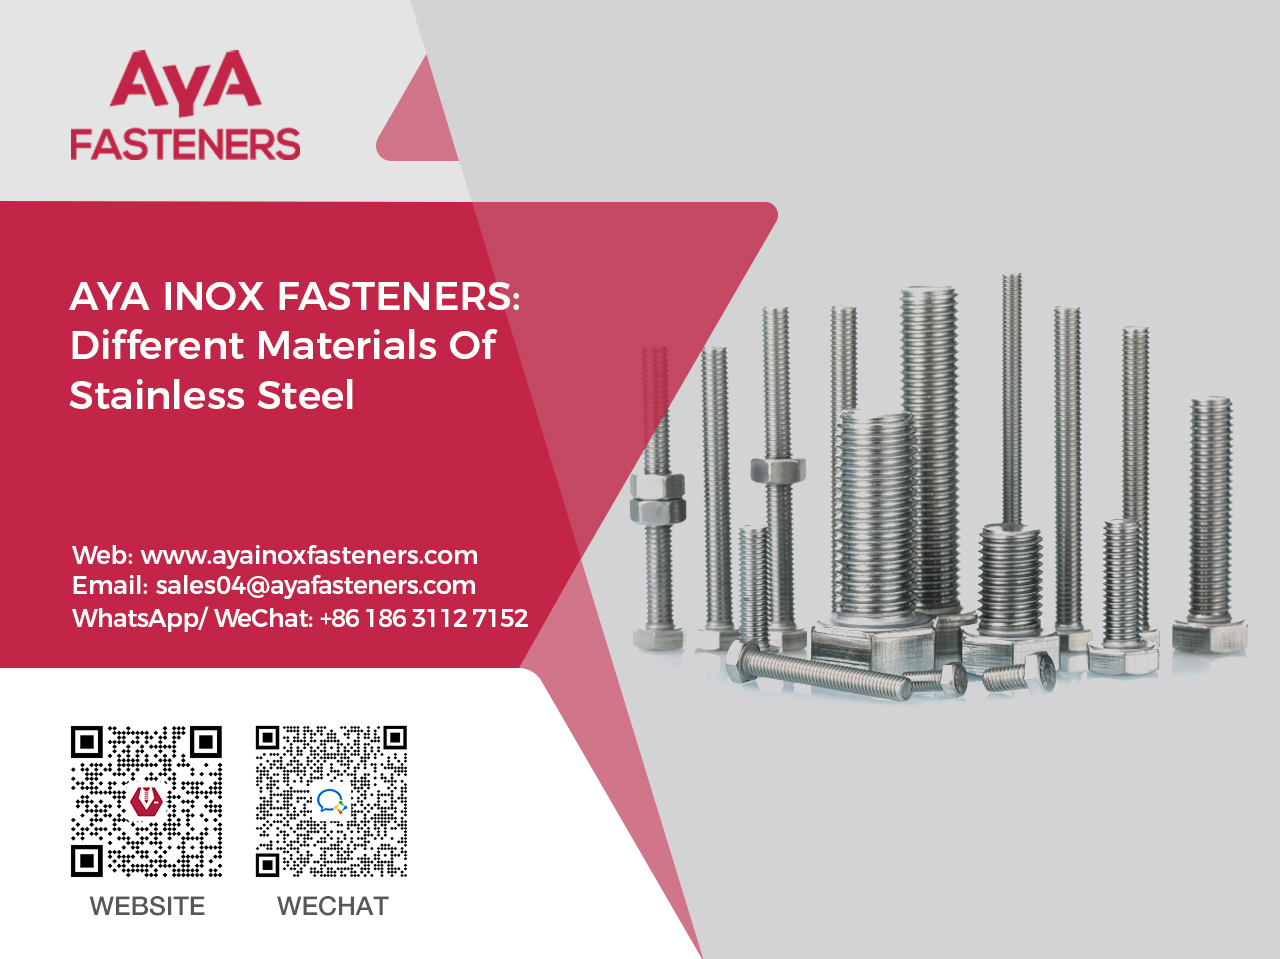 AYA INOX FASTENERS: Different Materials Of Stainless Steel